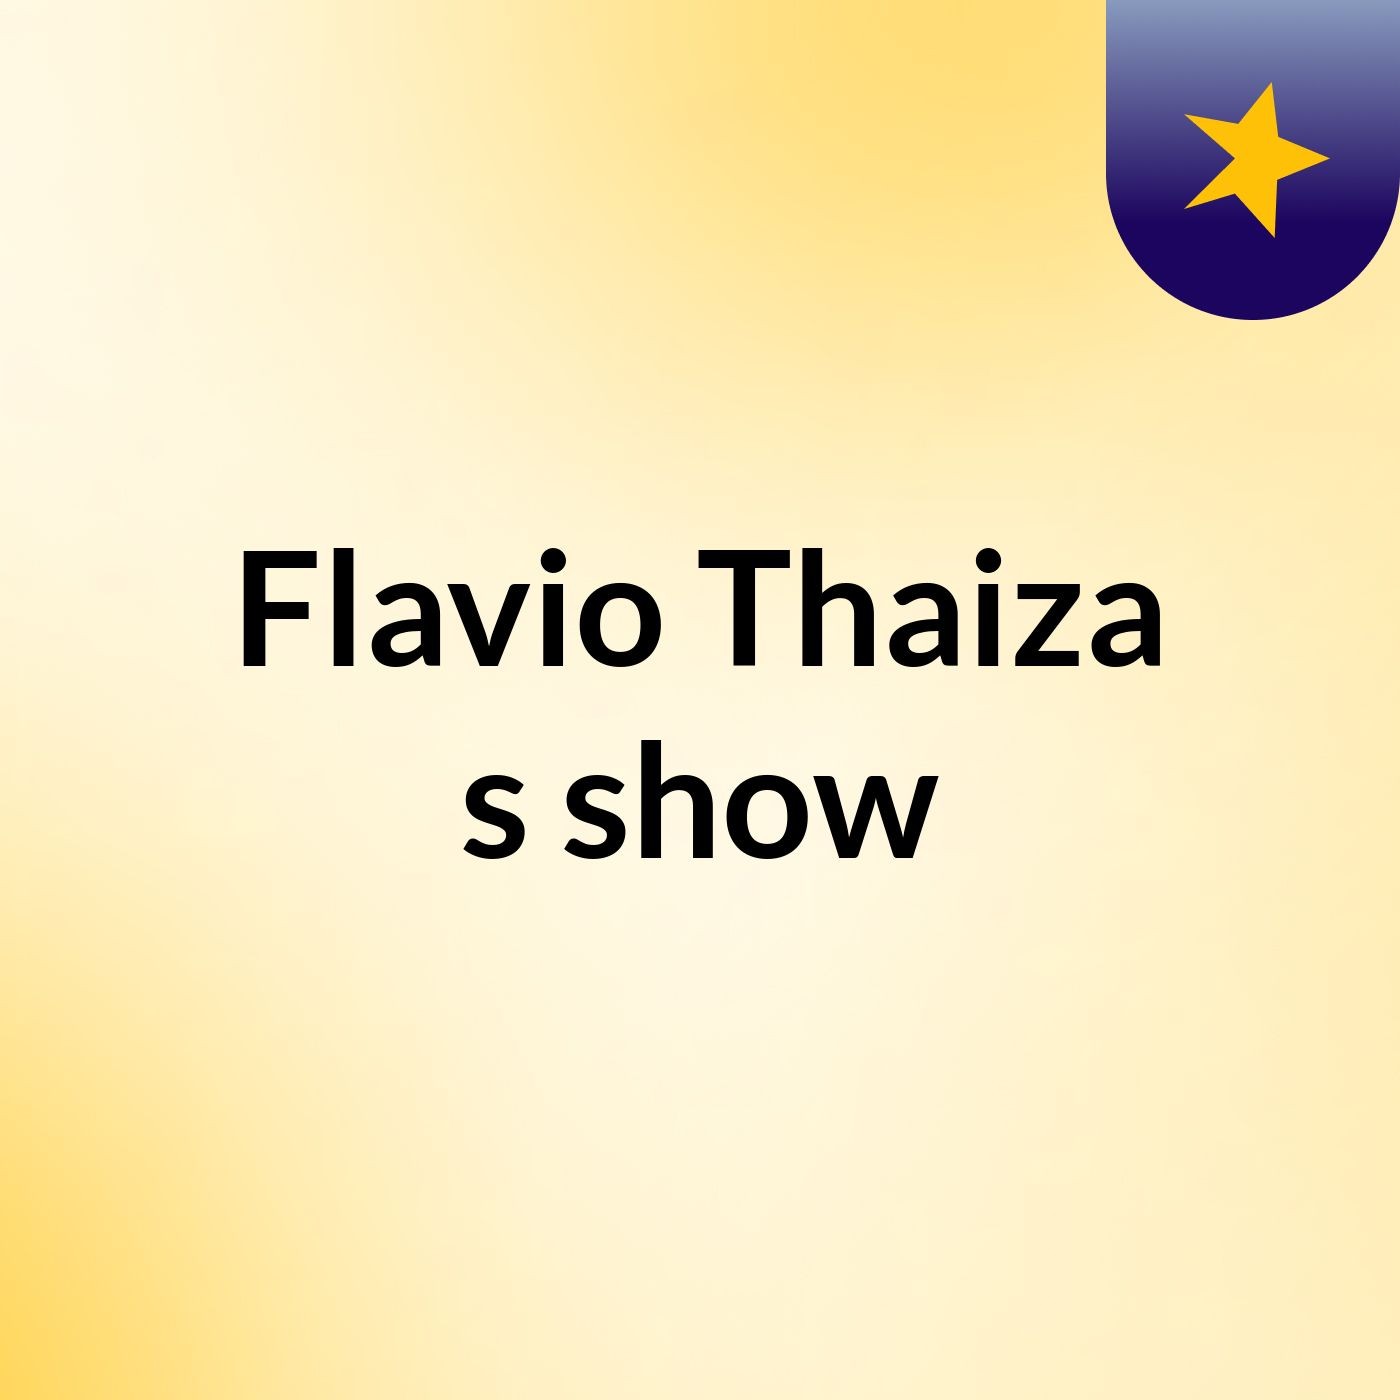 Flavio Thaiza's show